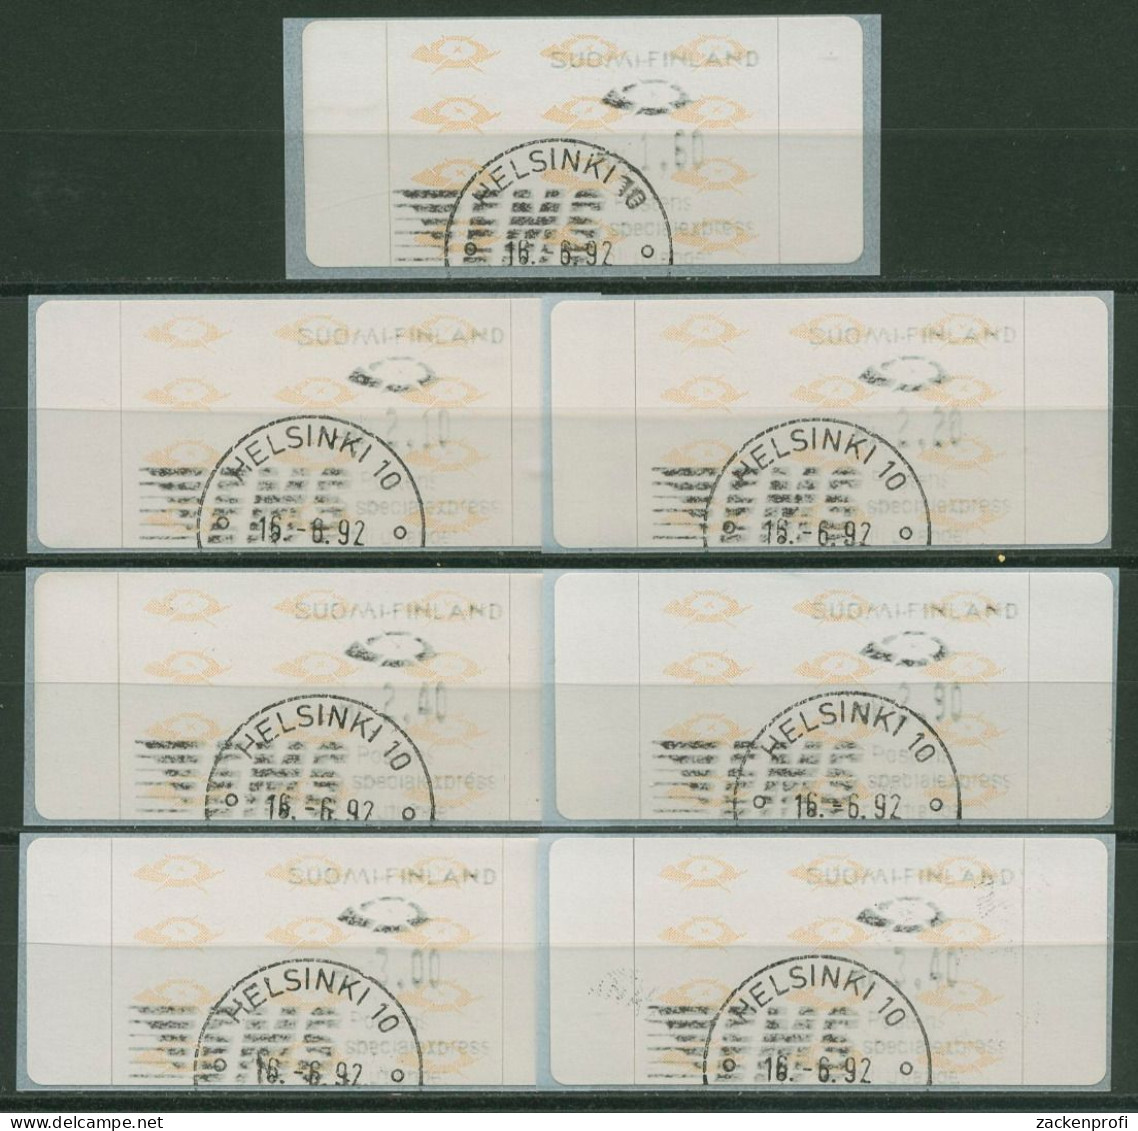 Finnland Automatenmarken 1992 Posthörner Satz 7 Werte ATM 12.2 S 1 Gestempelt - Viñetas De Franqueo [ATM]